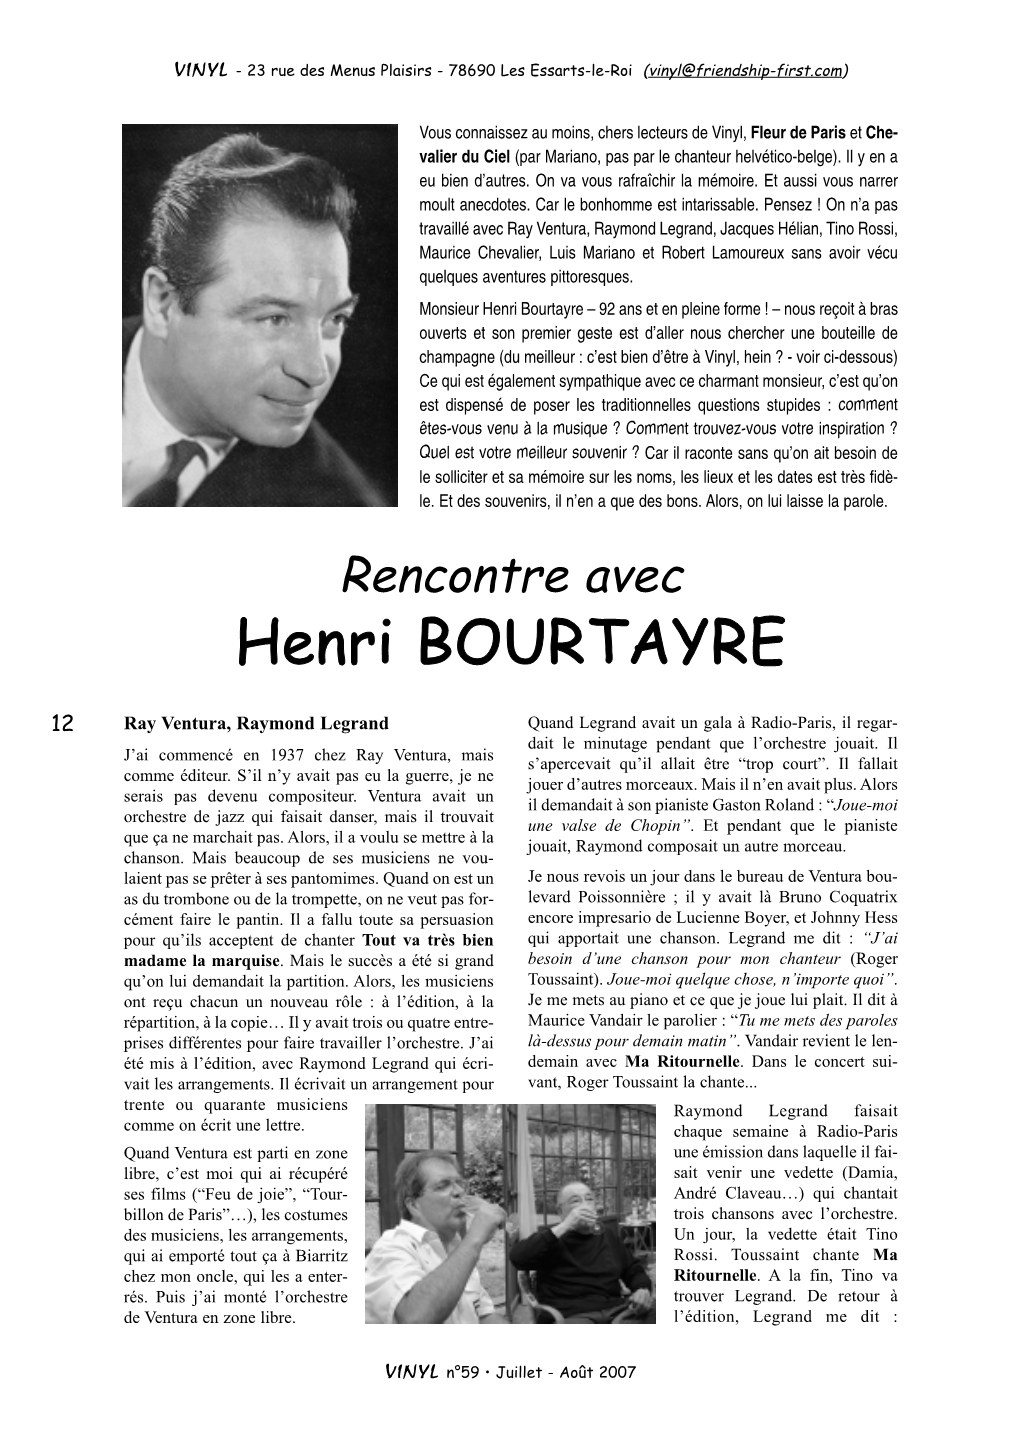 Henri BOURTAYRE